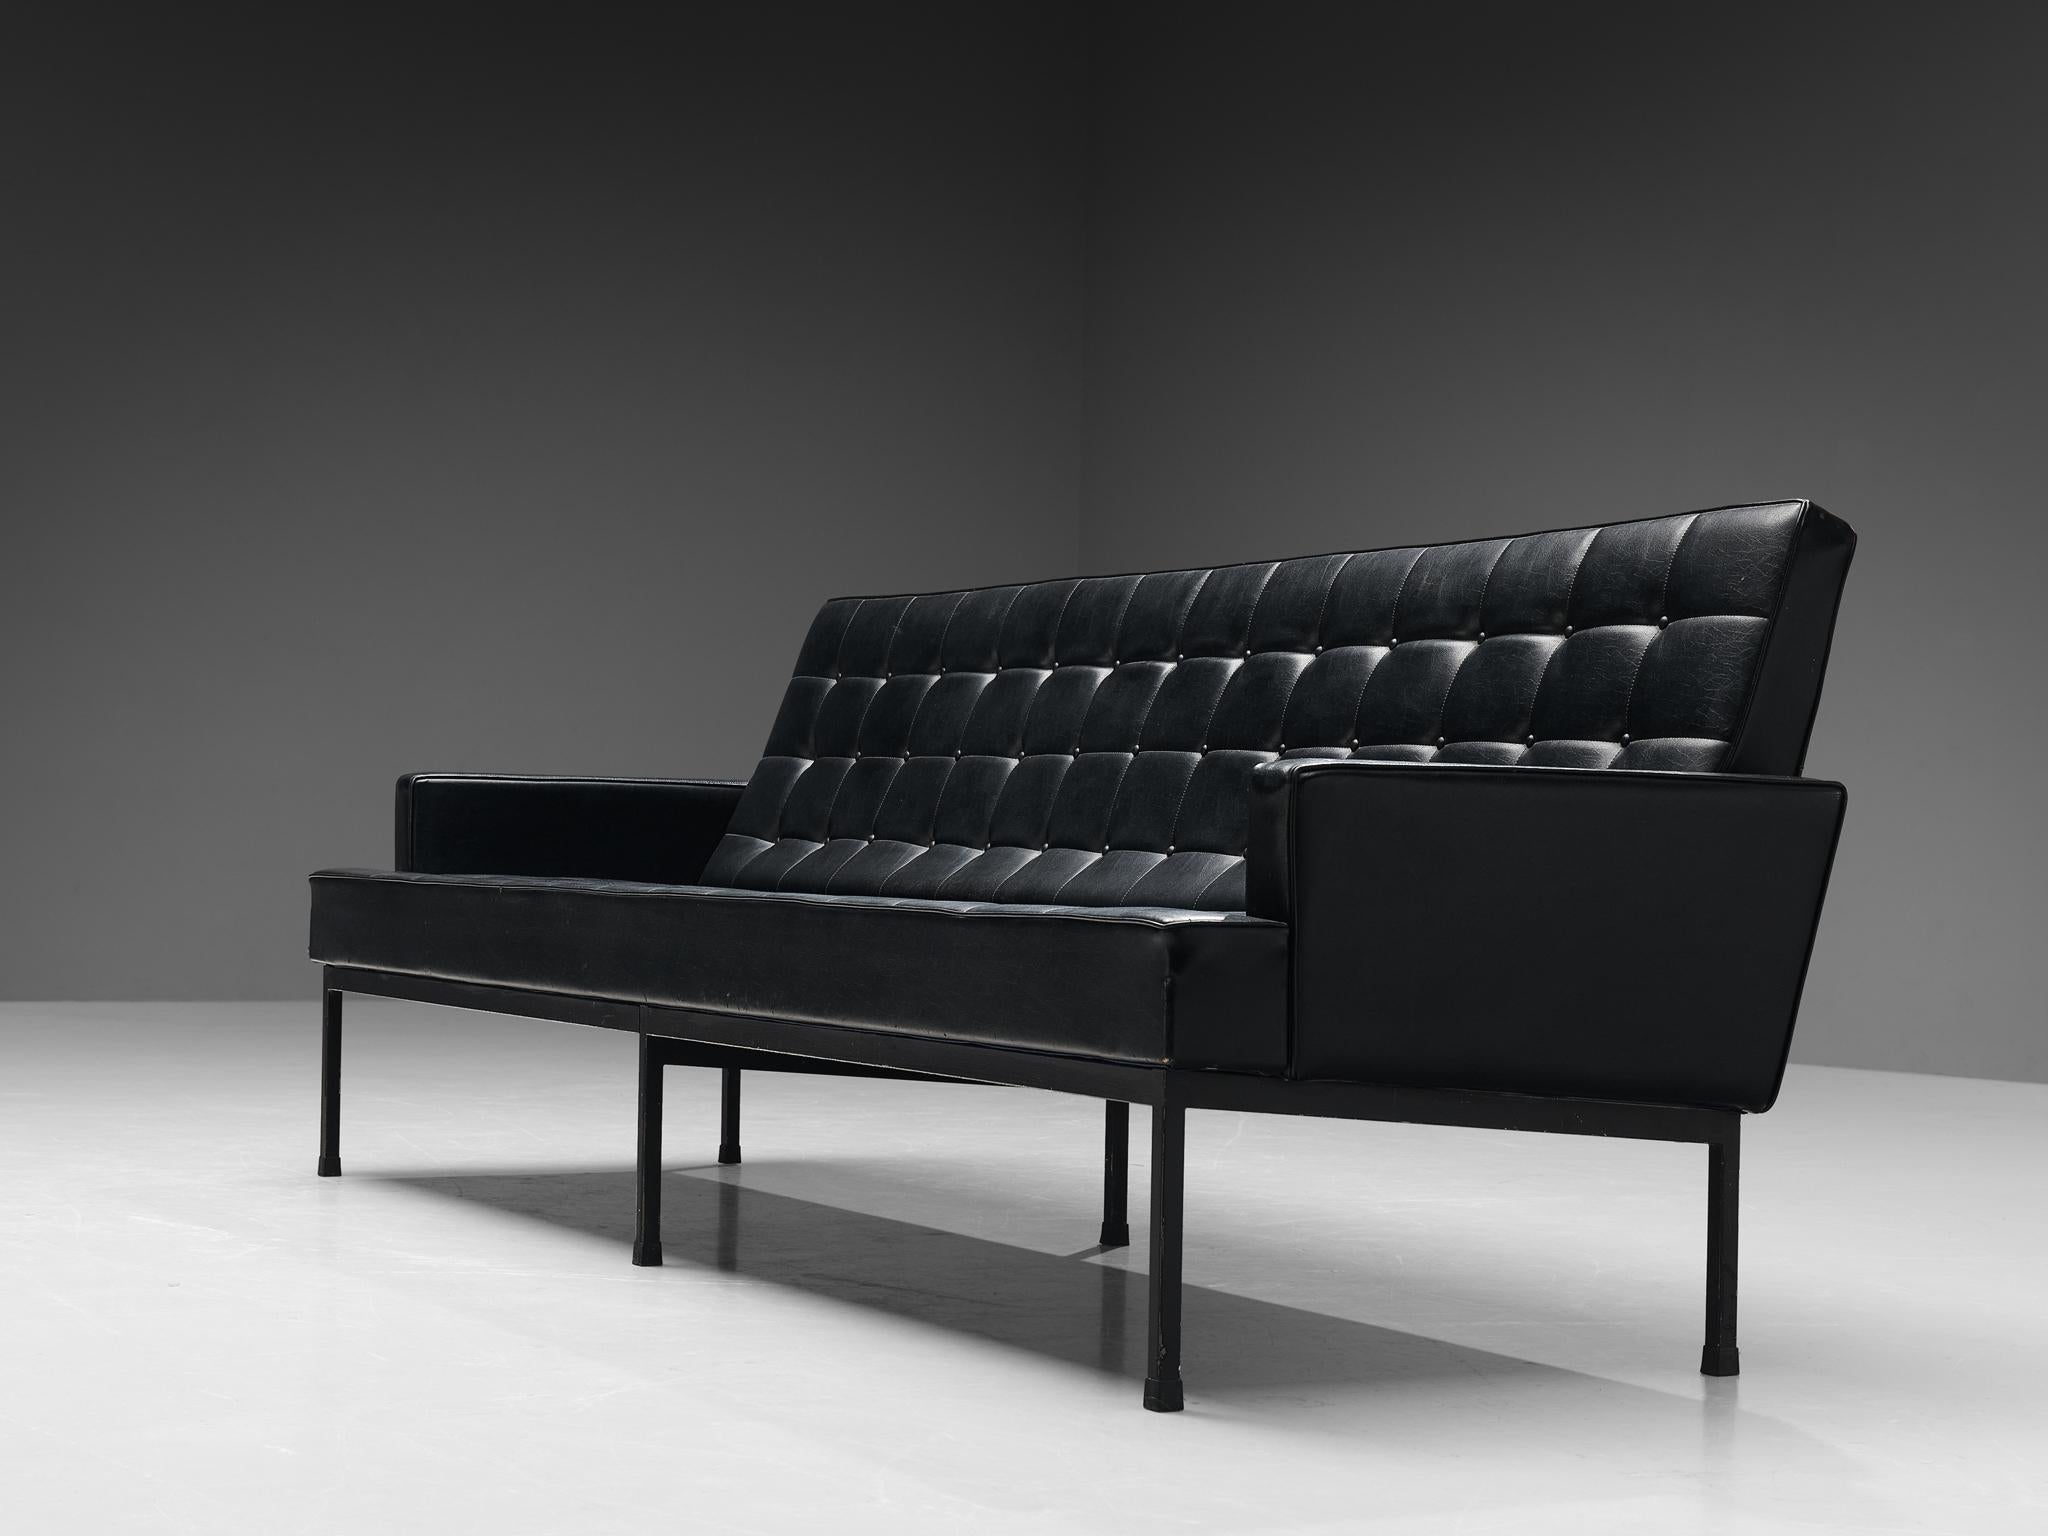 Late 20th Century Modern European Sofa in Black Leatherette